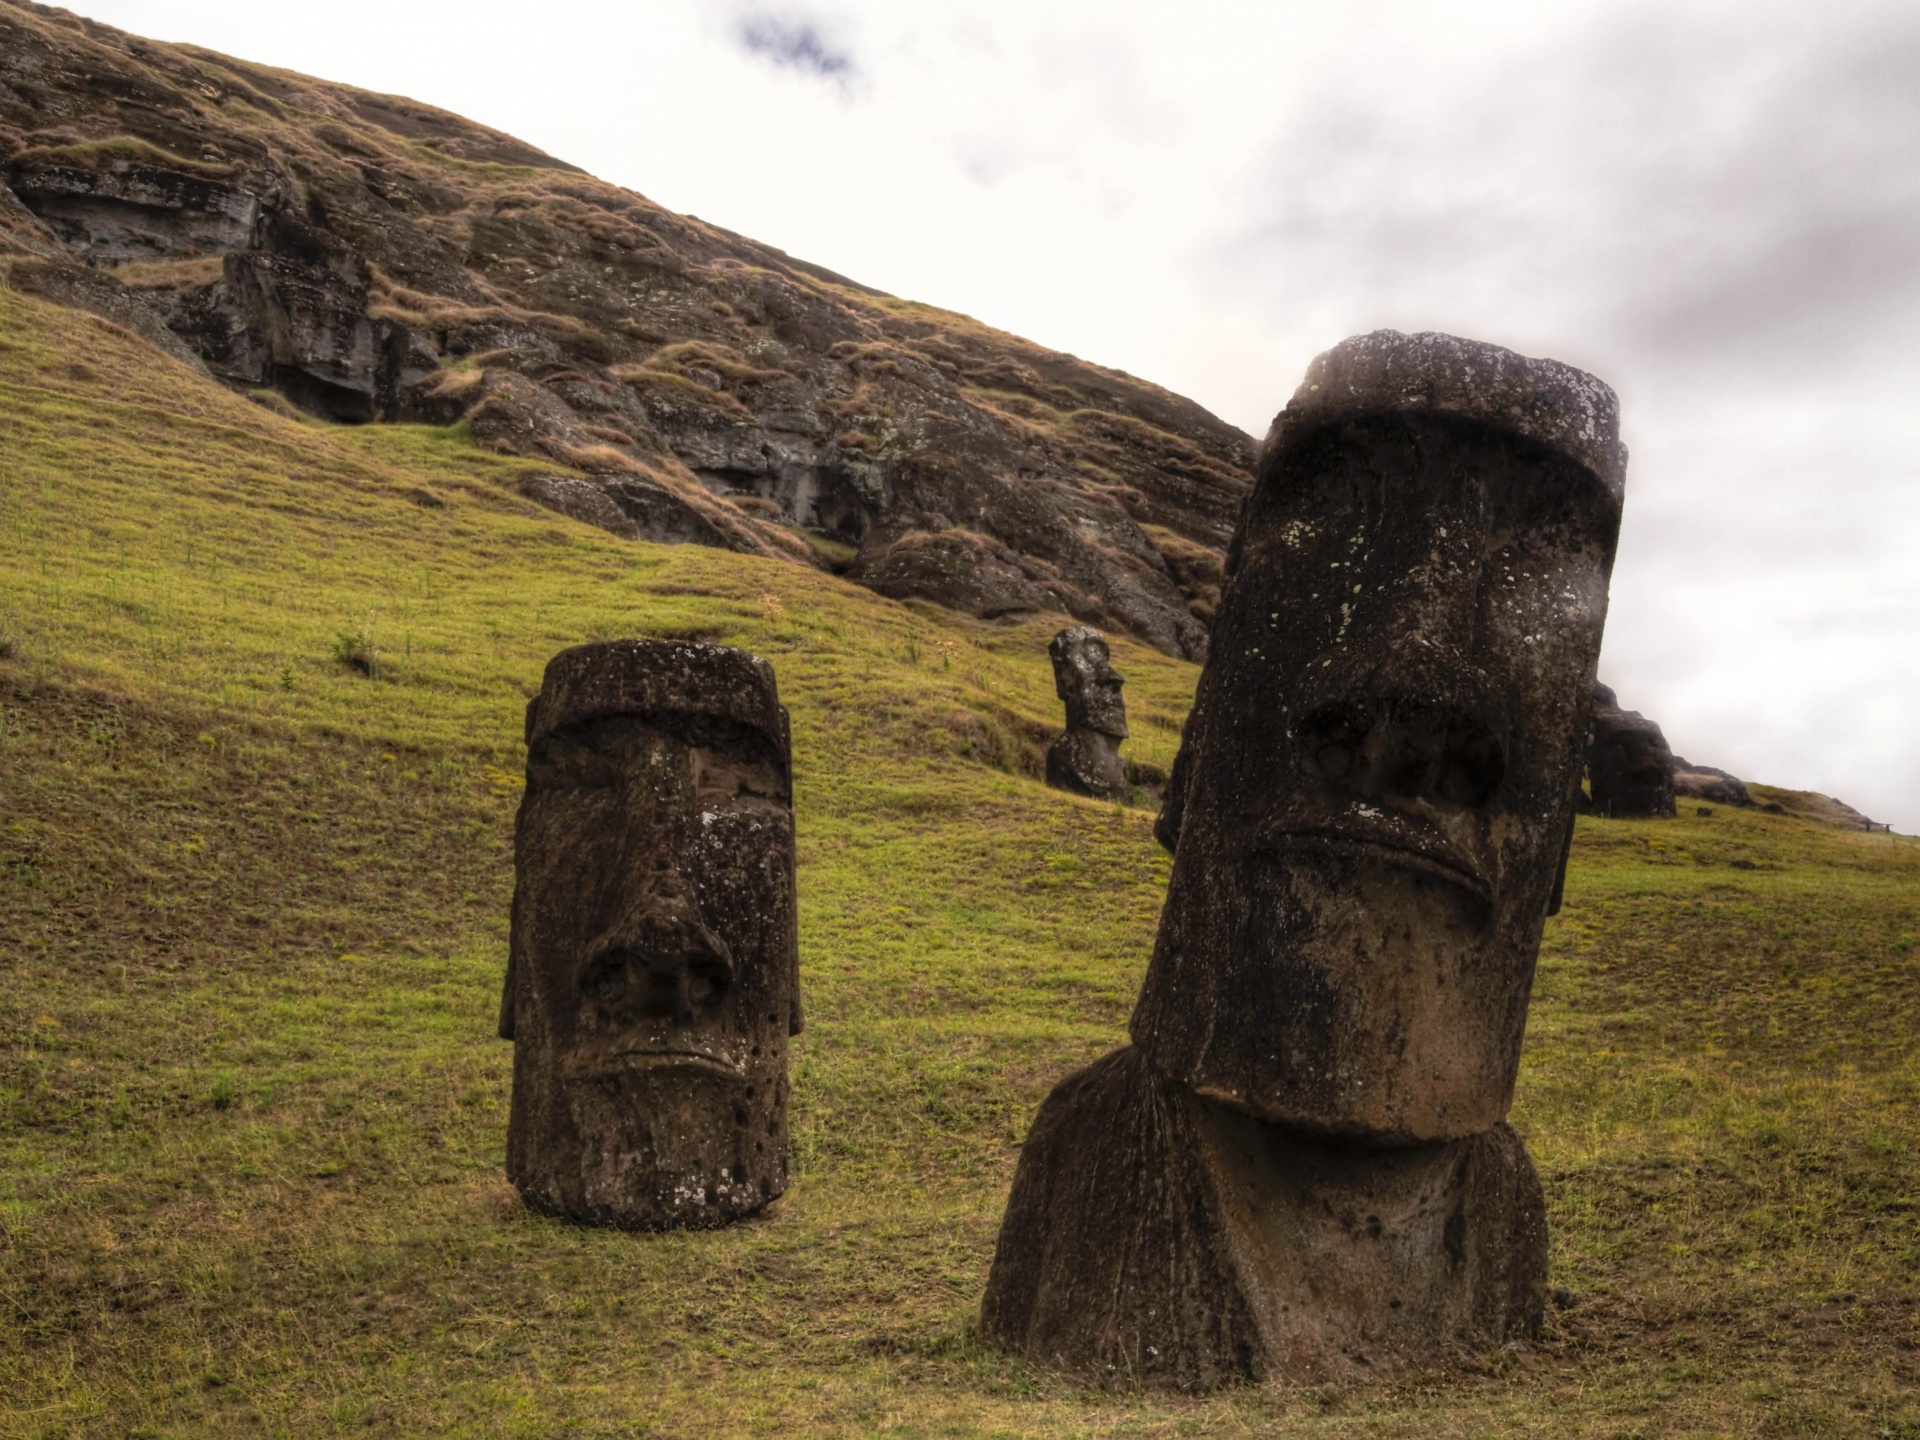 HD Easter Island Image